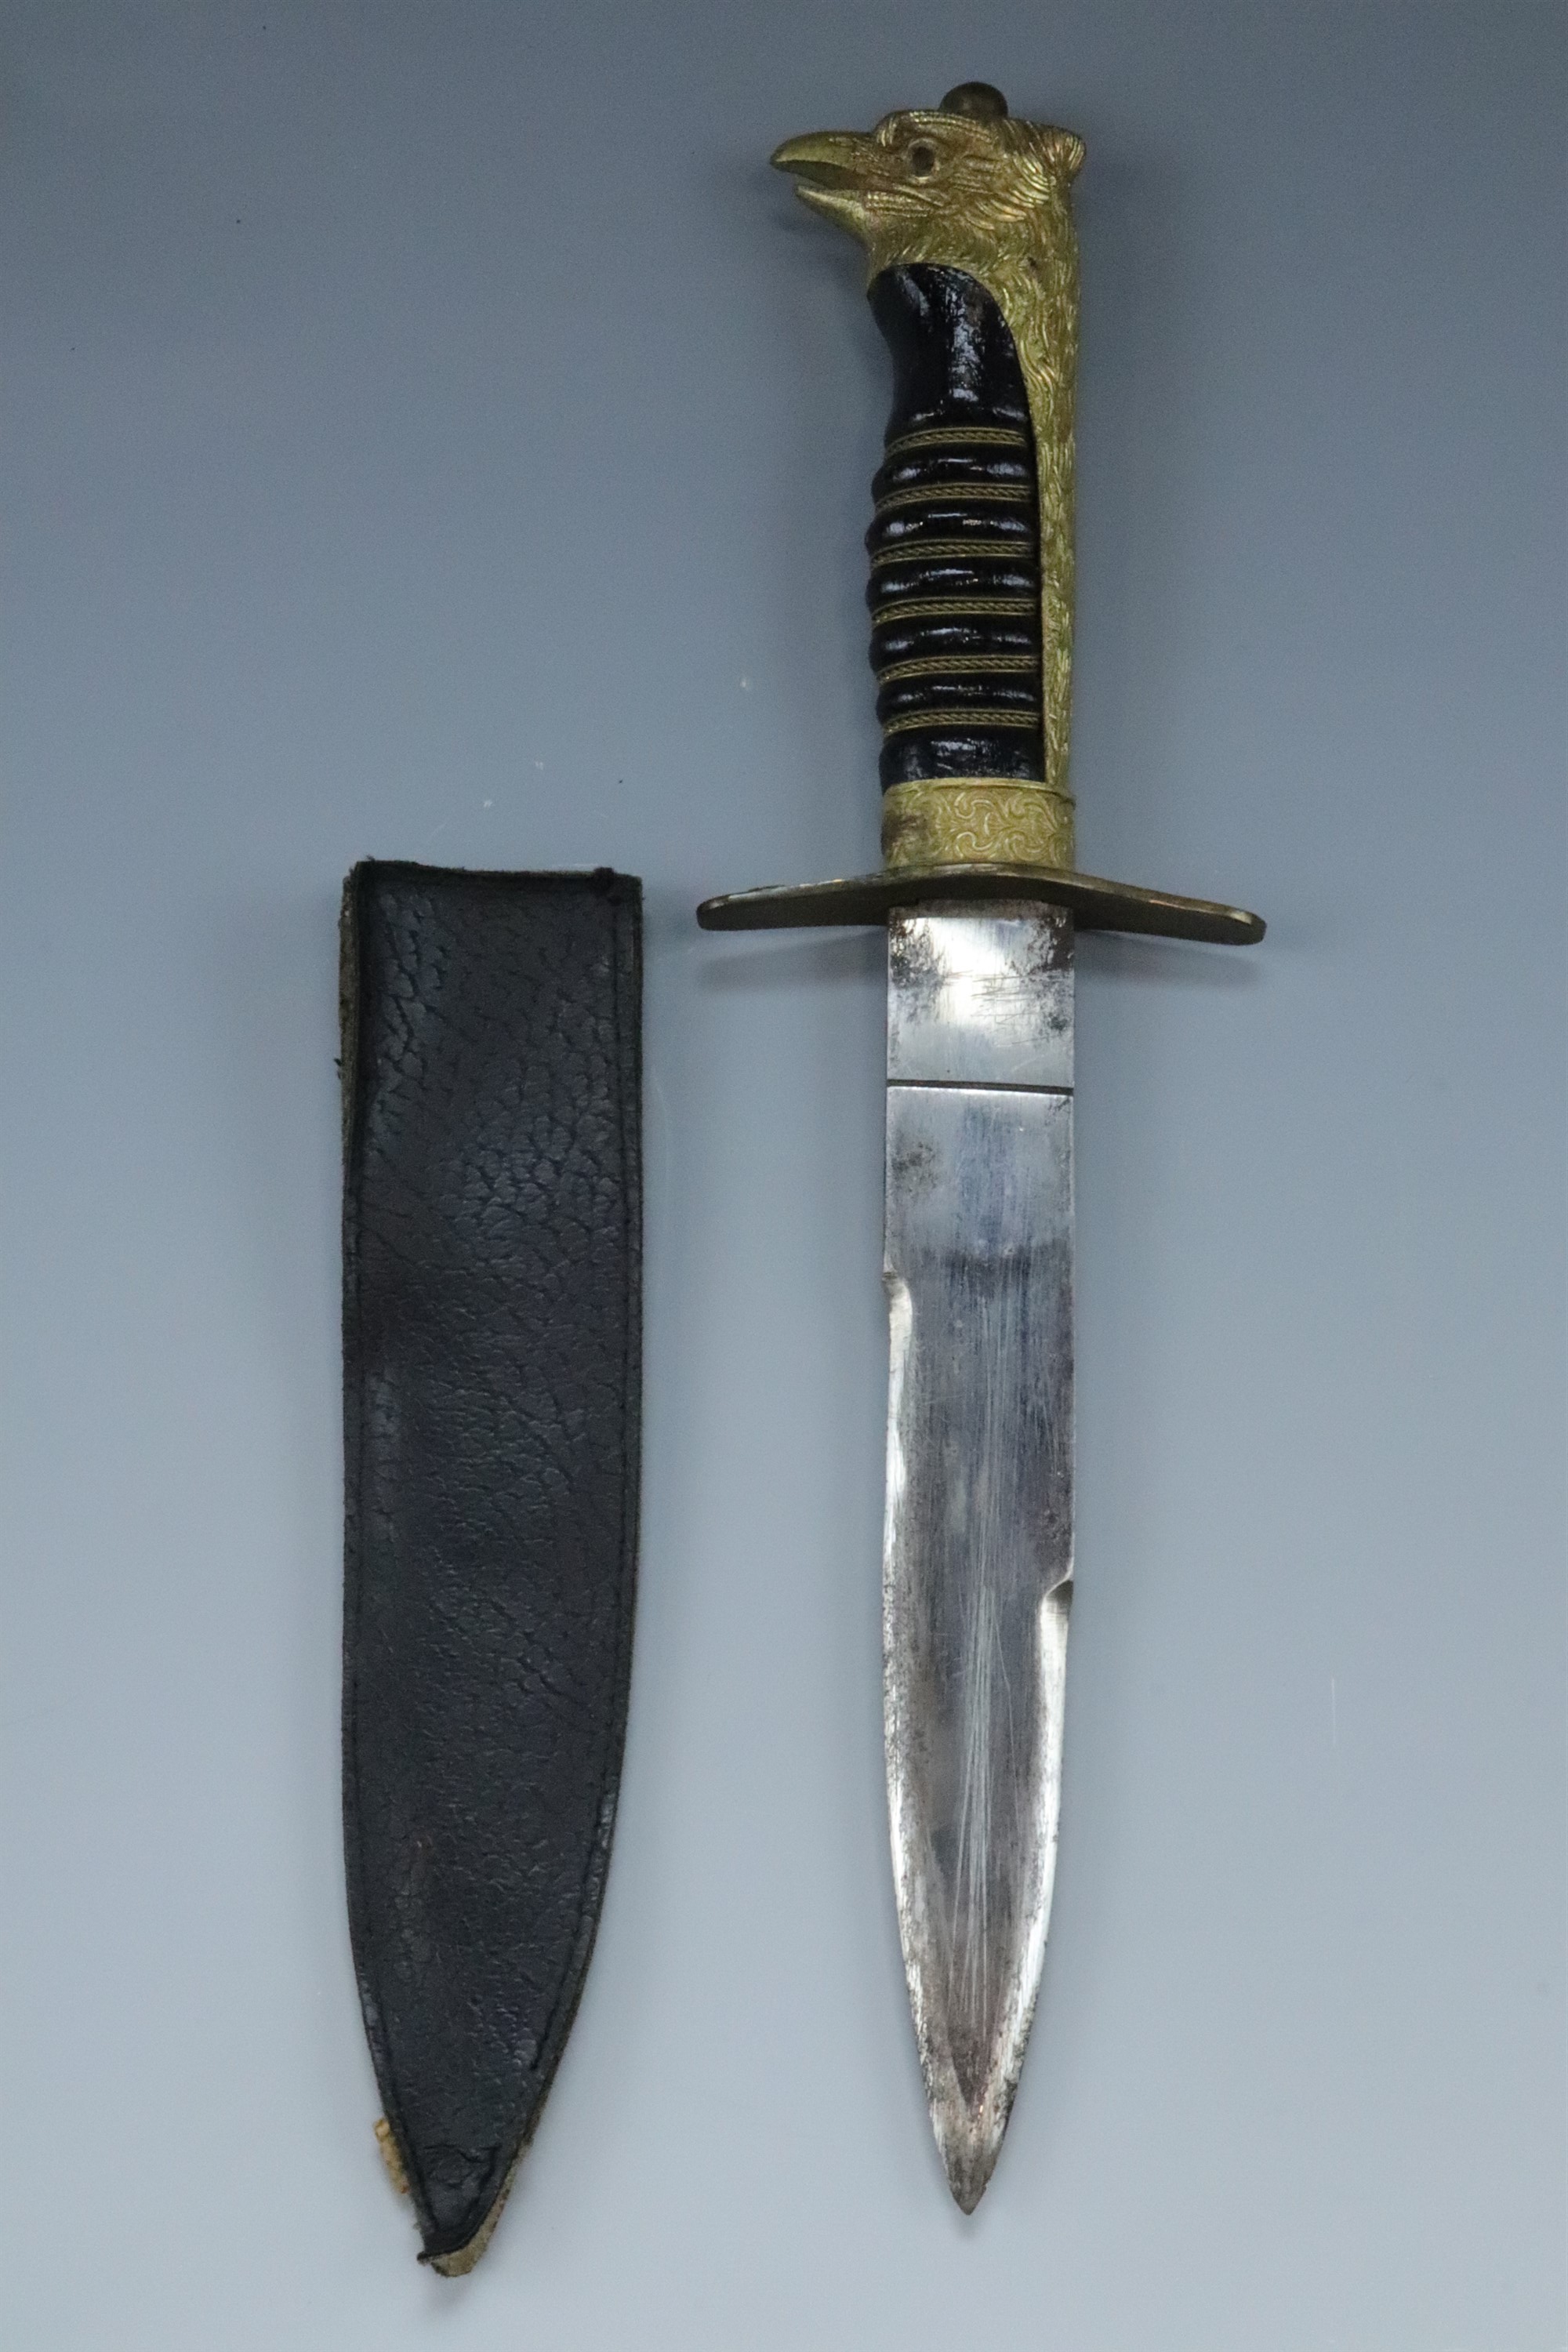 An Italian GIL / Fascist Youth dagger, 1930s - 1940s - Image 2 of 3